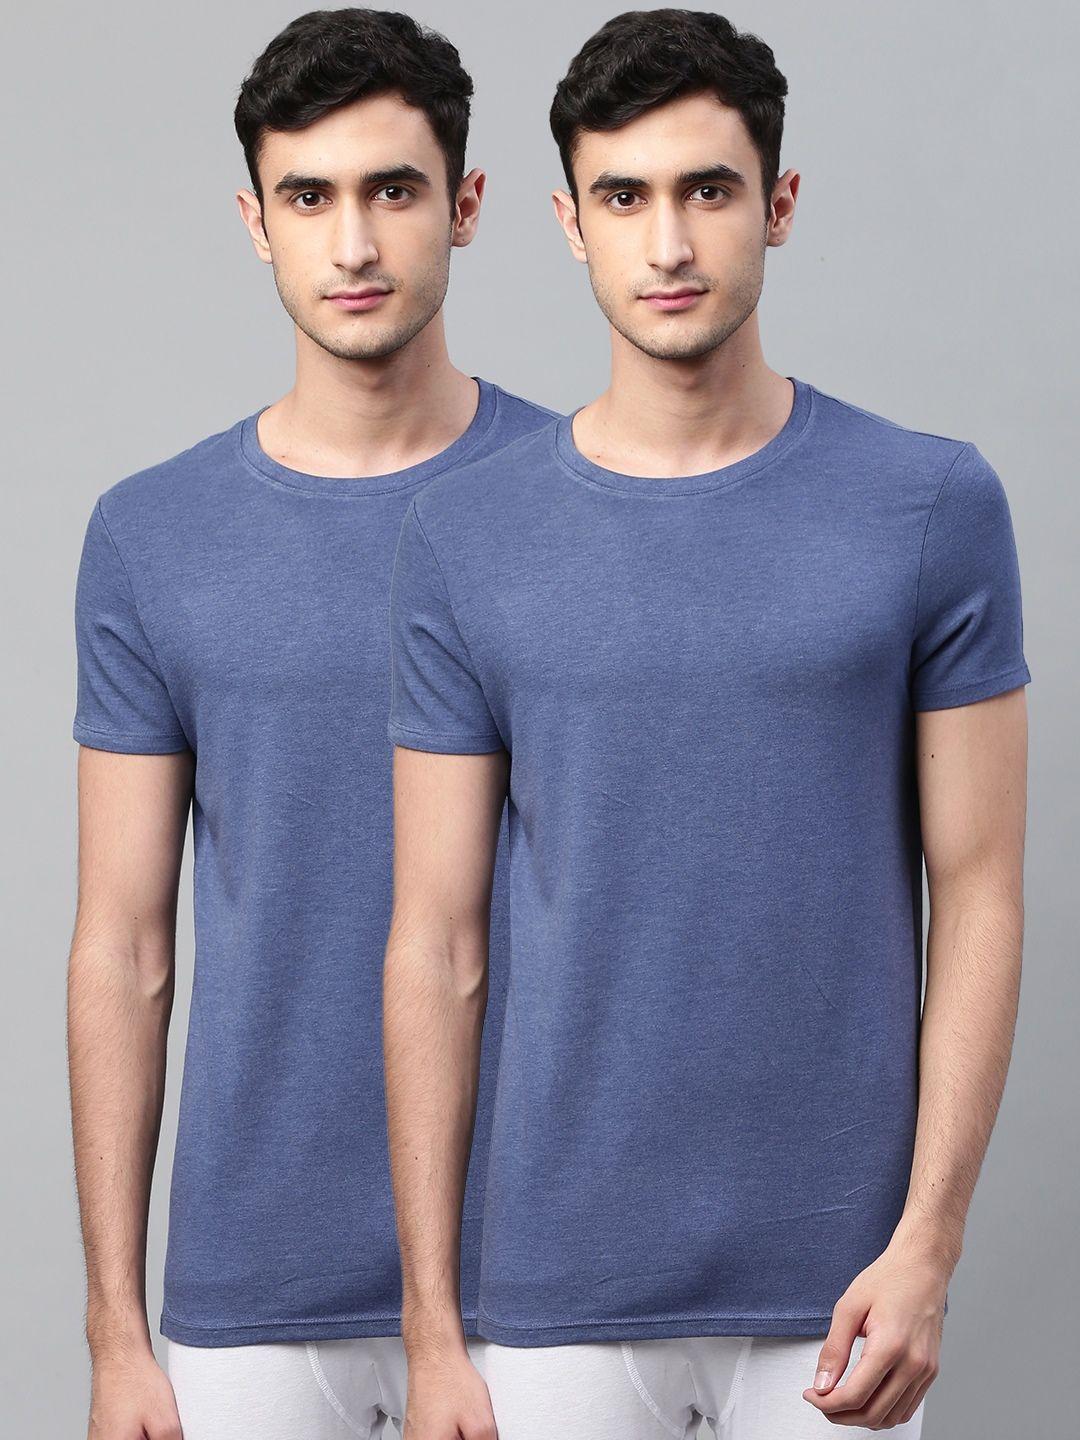 marks & spencer men pack of 2 blue solid thermal t-shirts